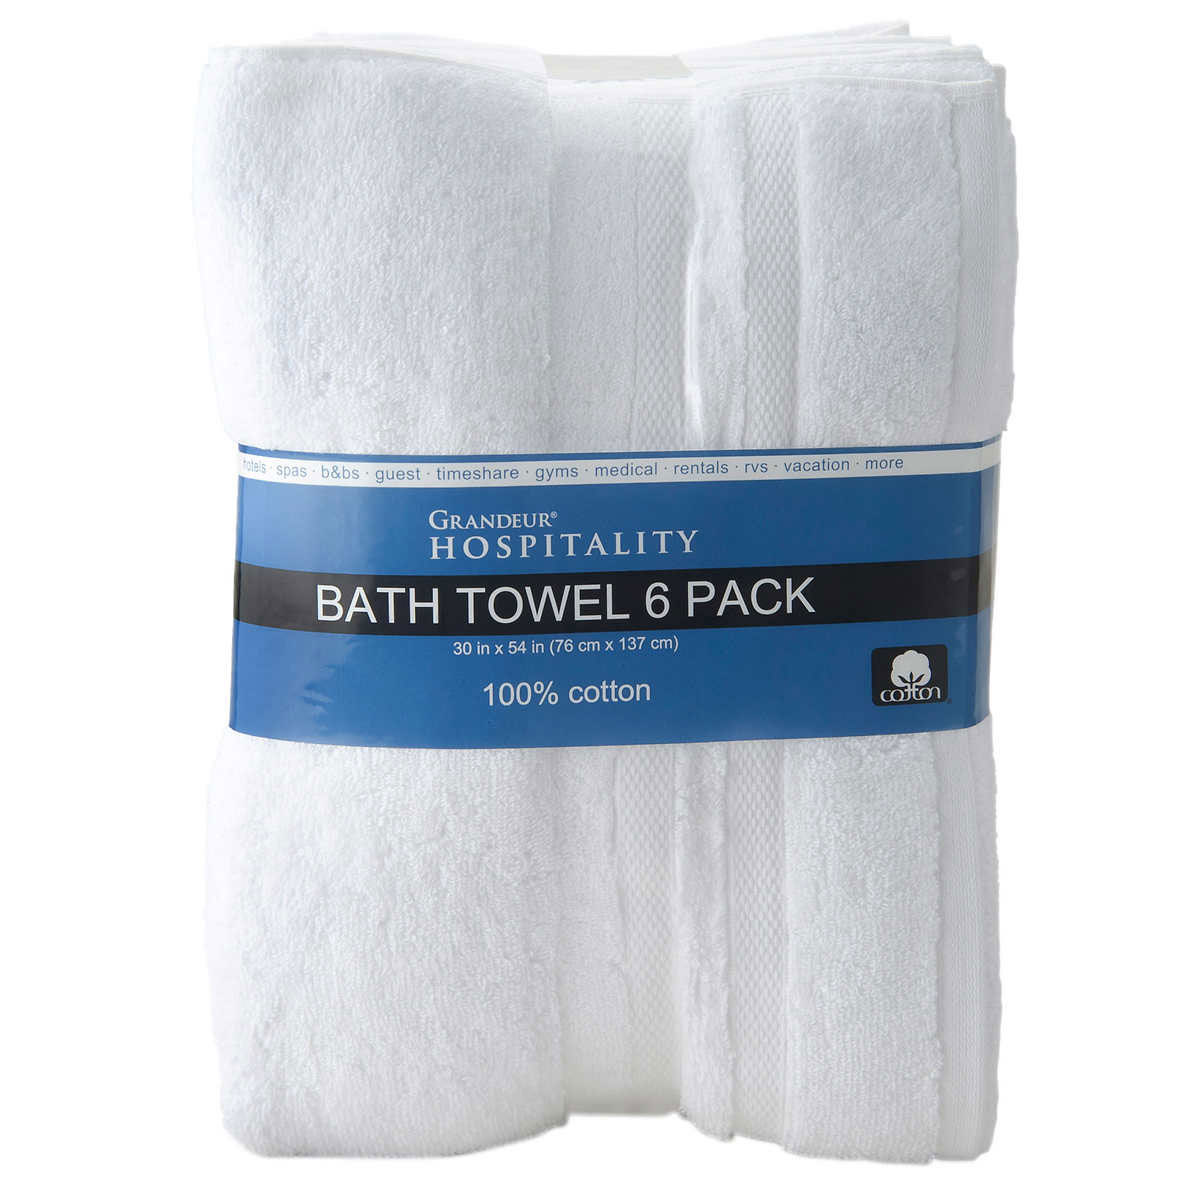 Grandeur 100% Cotton Hospitality Bath Towels, 6 Pack